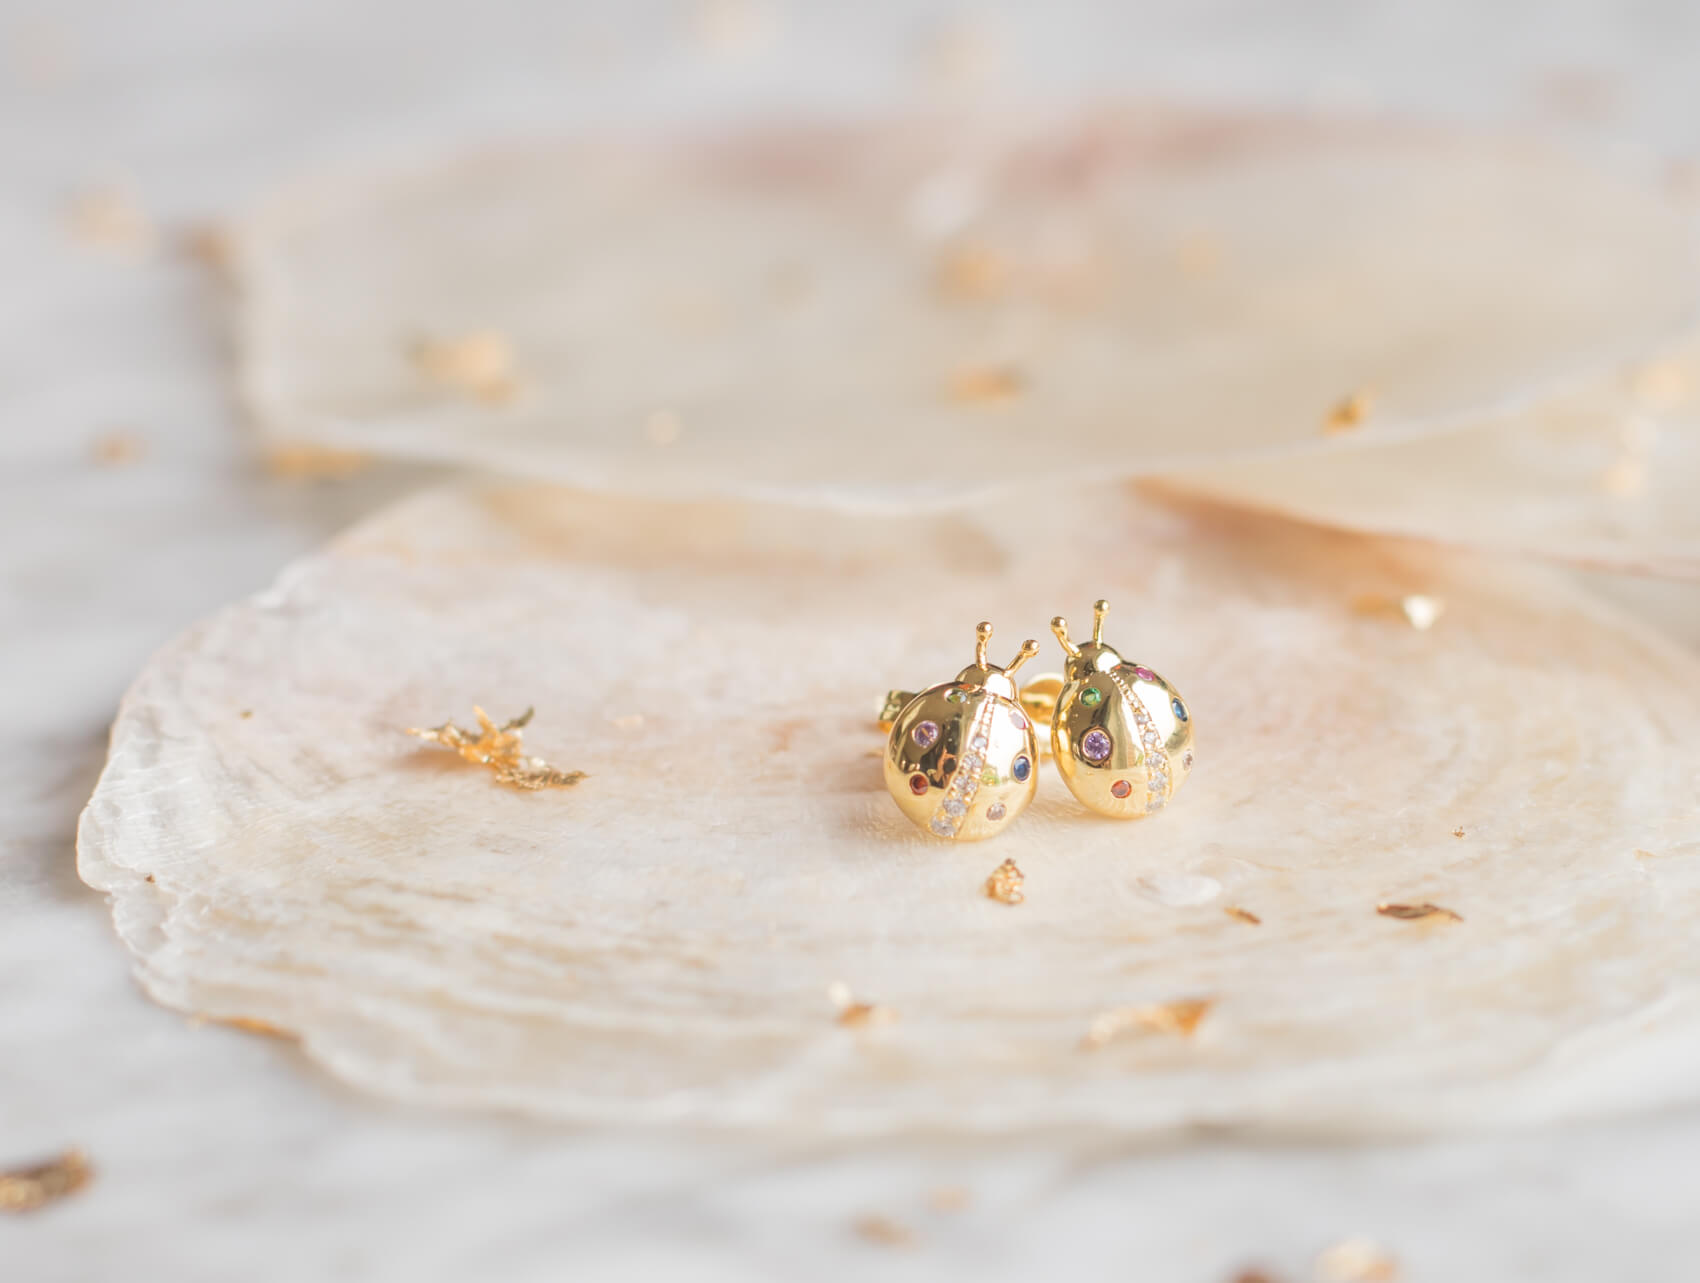 oorstekers Little Lady Bug lieveheersbeestje gold plated 18K oorbellen communie vooraanzicht